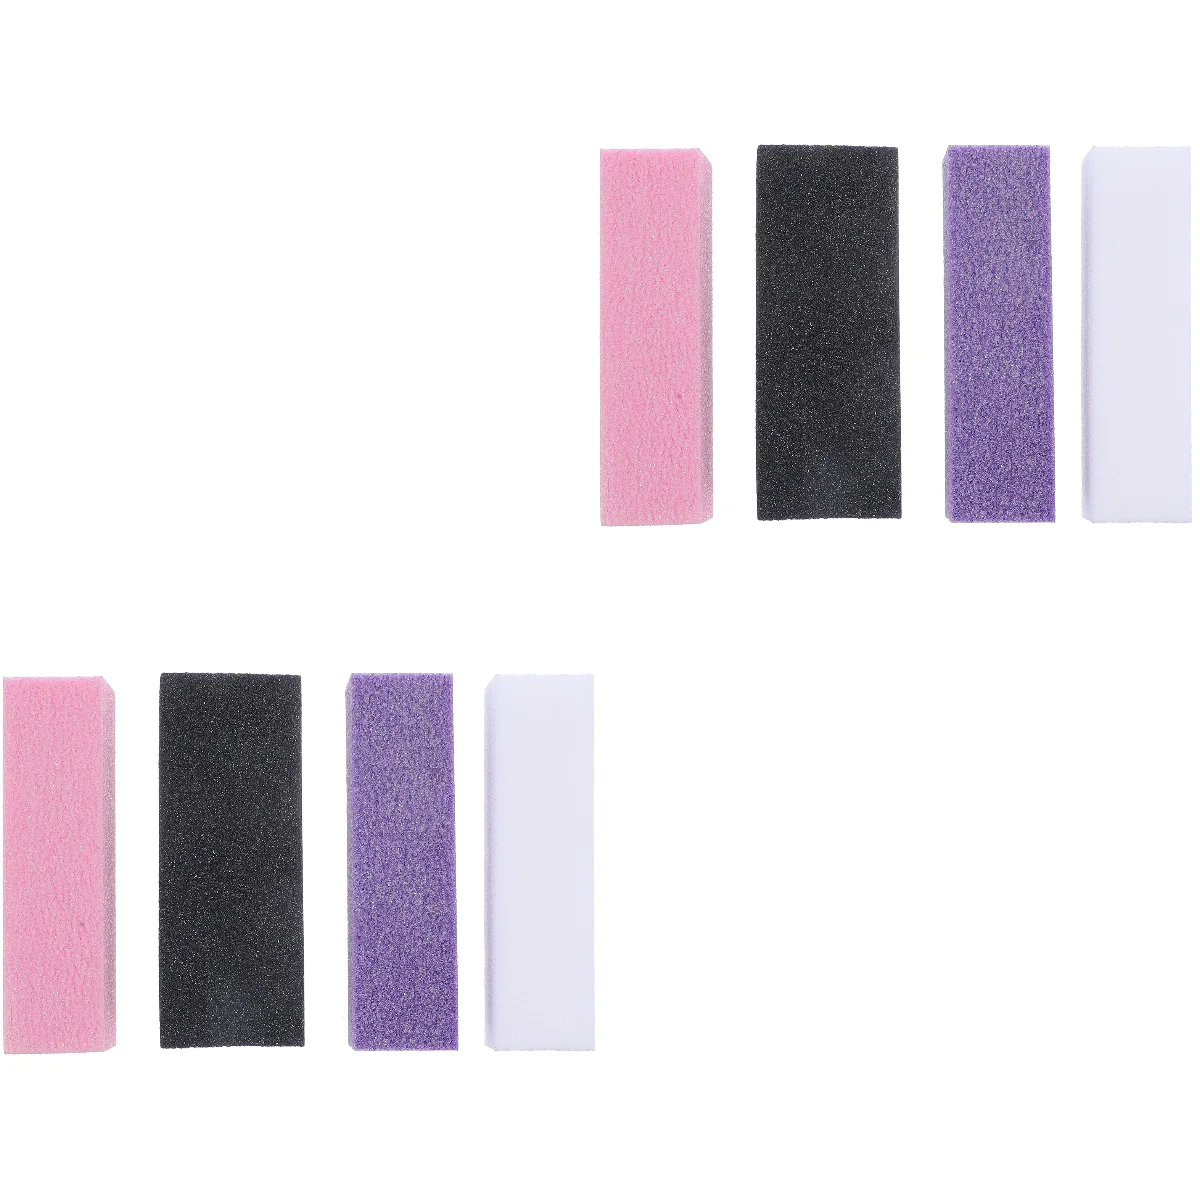 

40 Pcs Nail Polish Block Sponge File Trimmers Polishing Tool Pink Supplies Beauty Pedicure Tools Fingernails